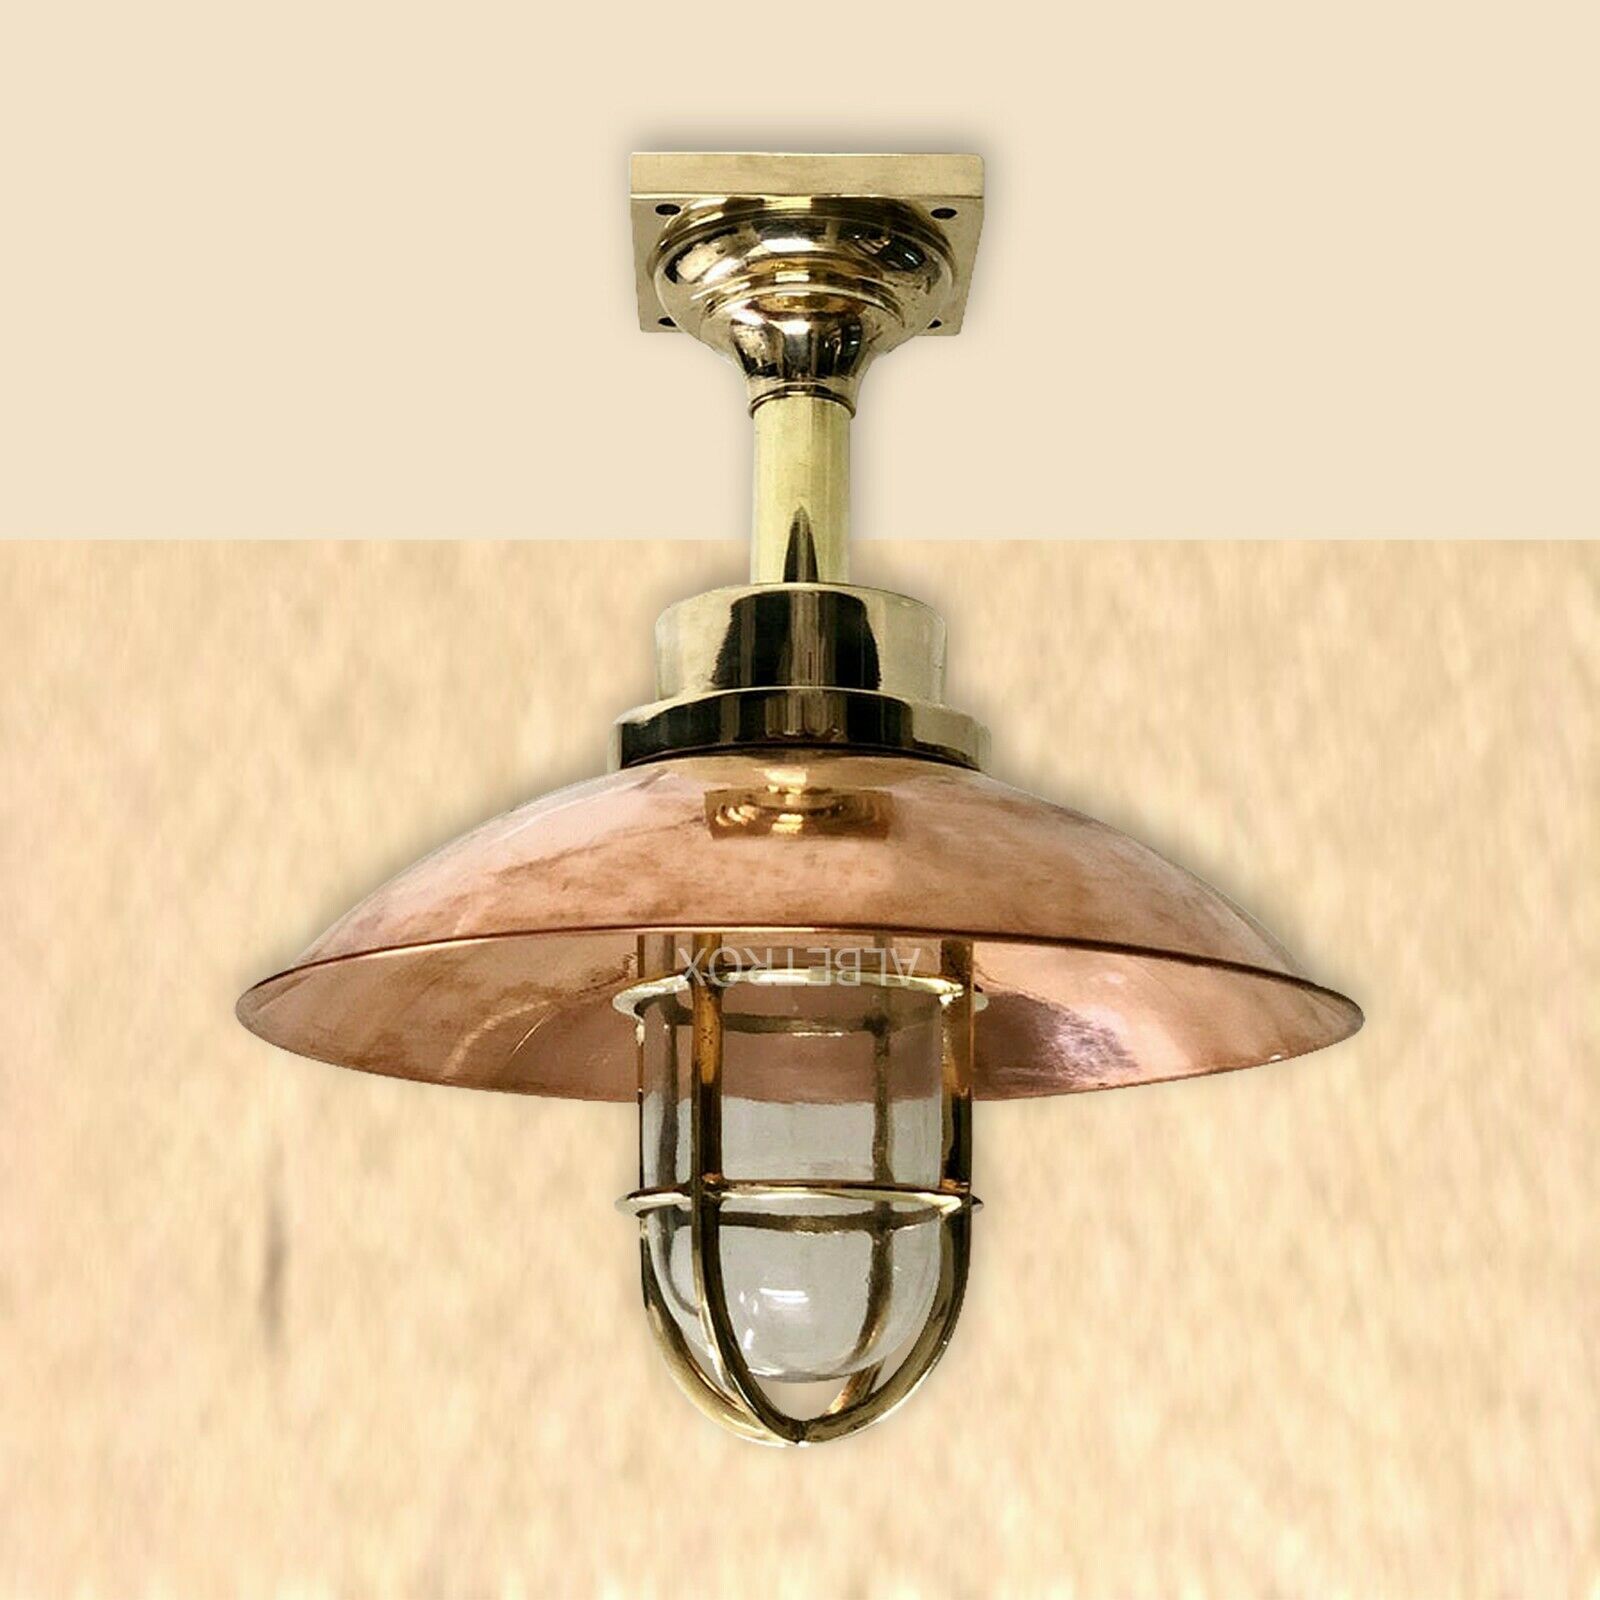 Nautical Bulkhead Light Brass Marine Vintage with Copper Shade Ceiling Light